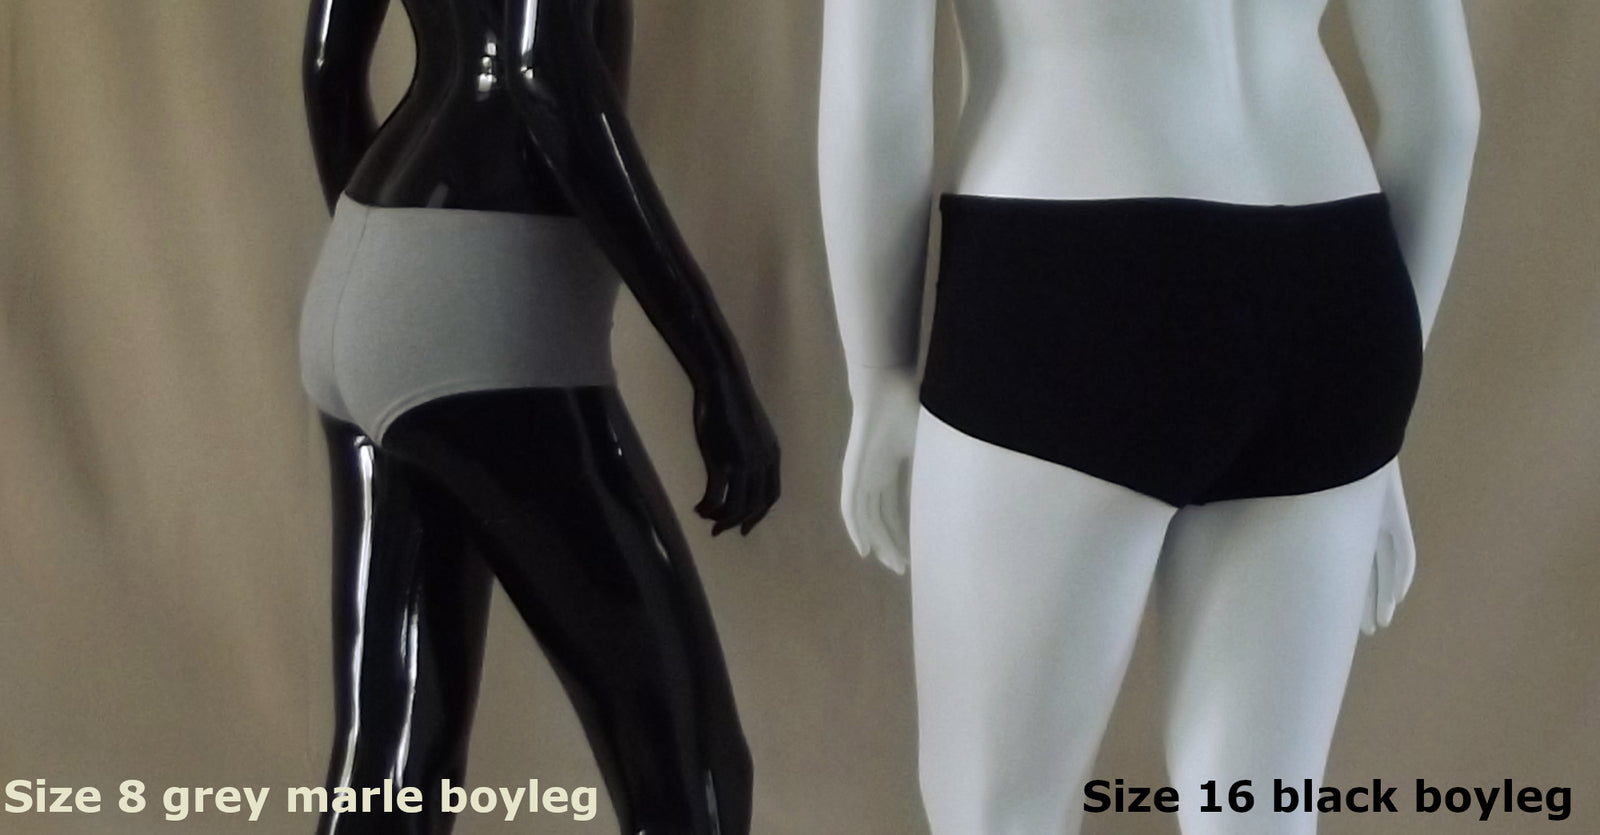 back view of grey and black boyleg underwear